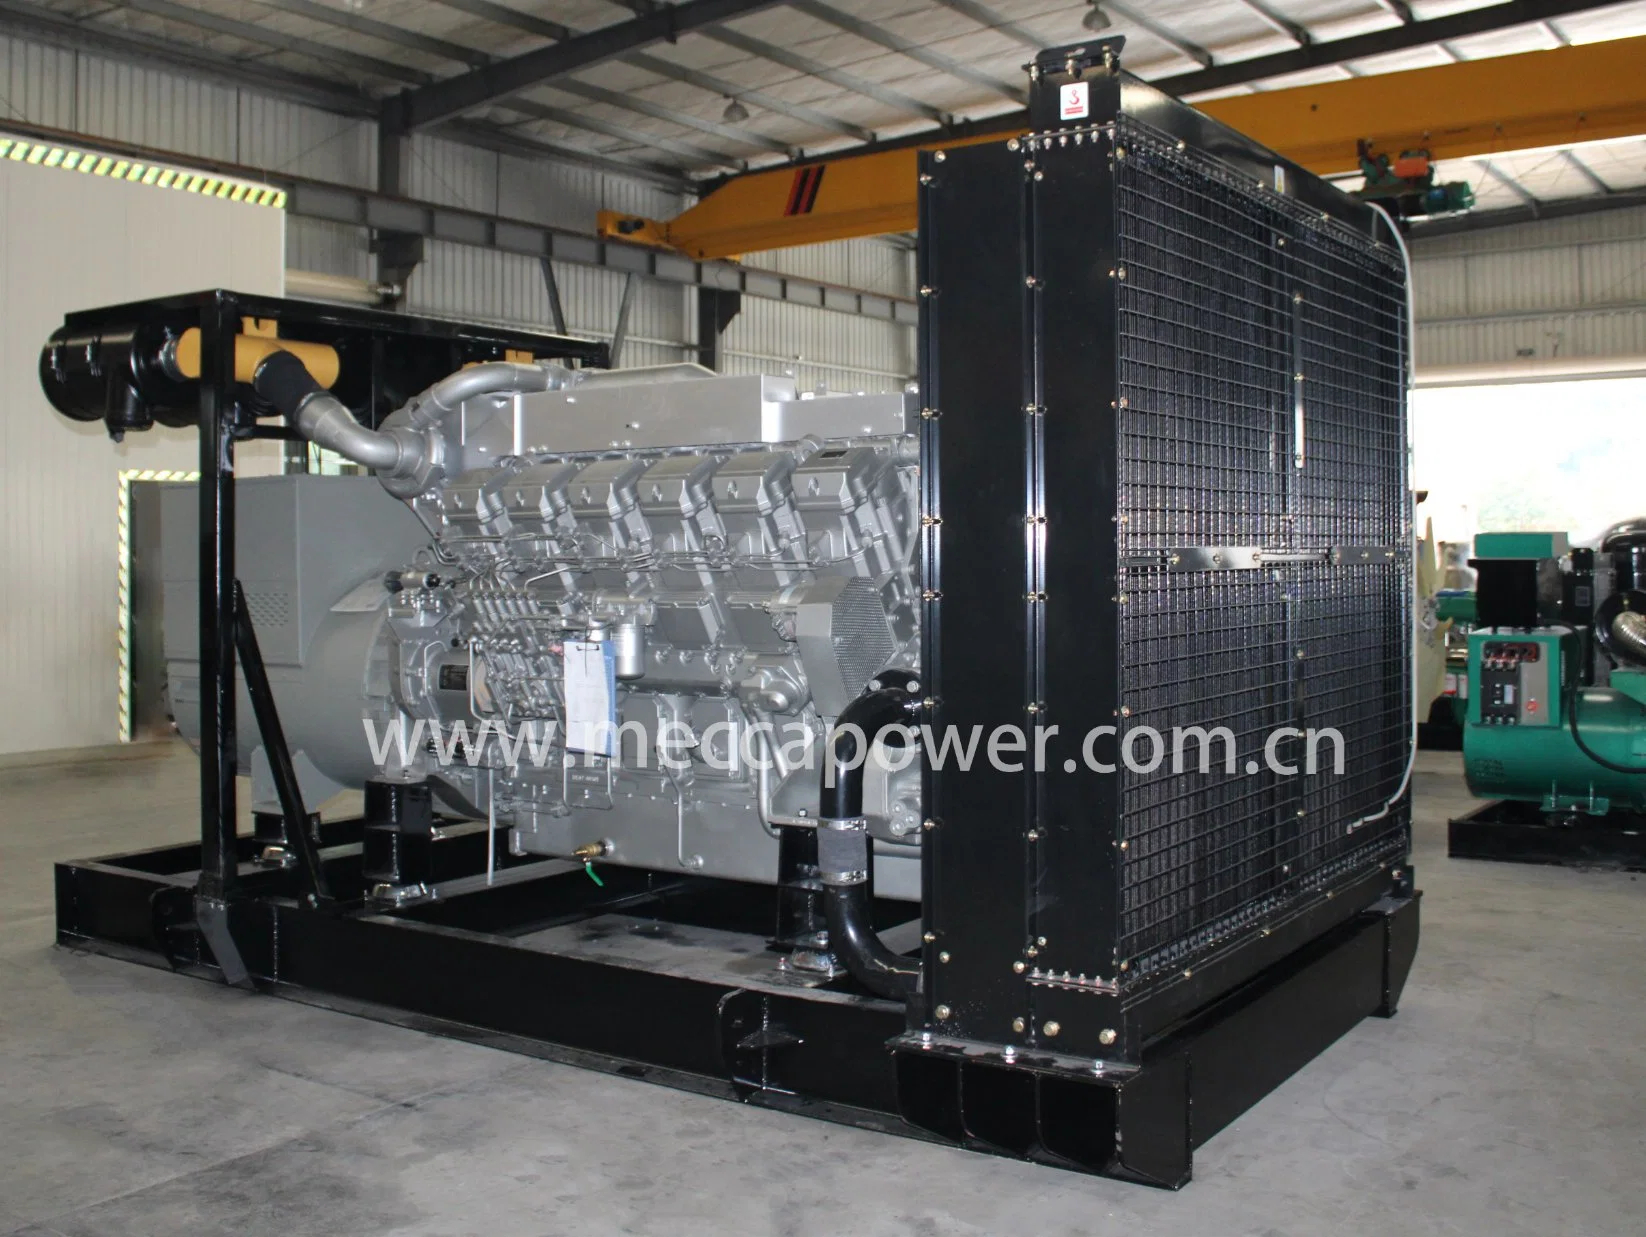 1232kw Electric Open Type Mitsubishi Engine Diesel Backup/Emergency/Standby Power Generator